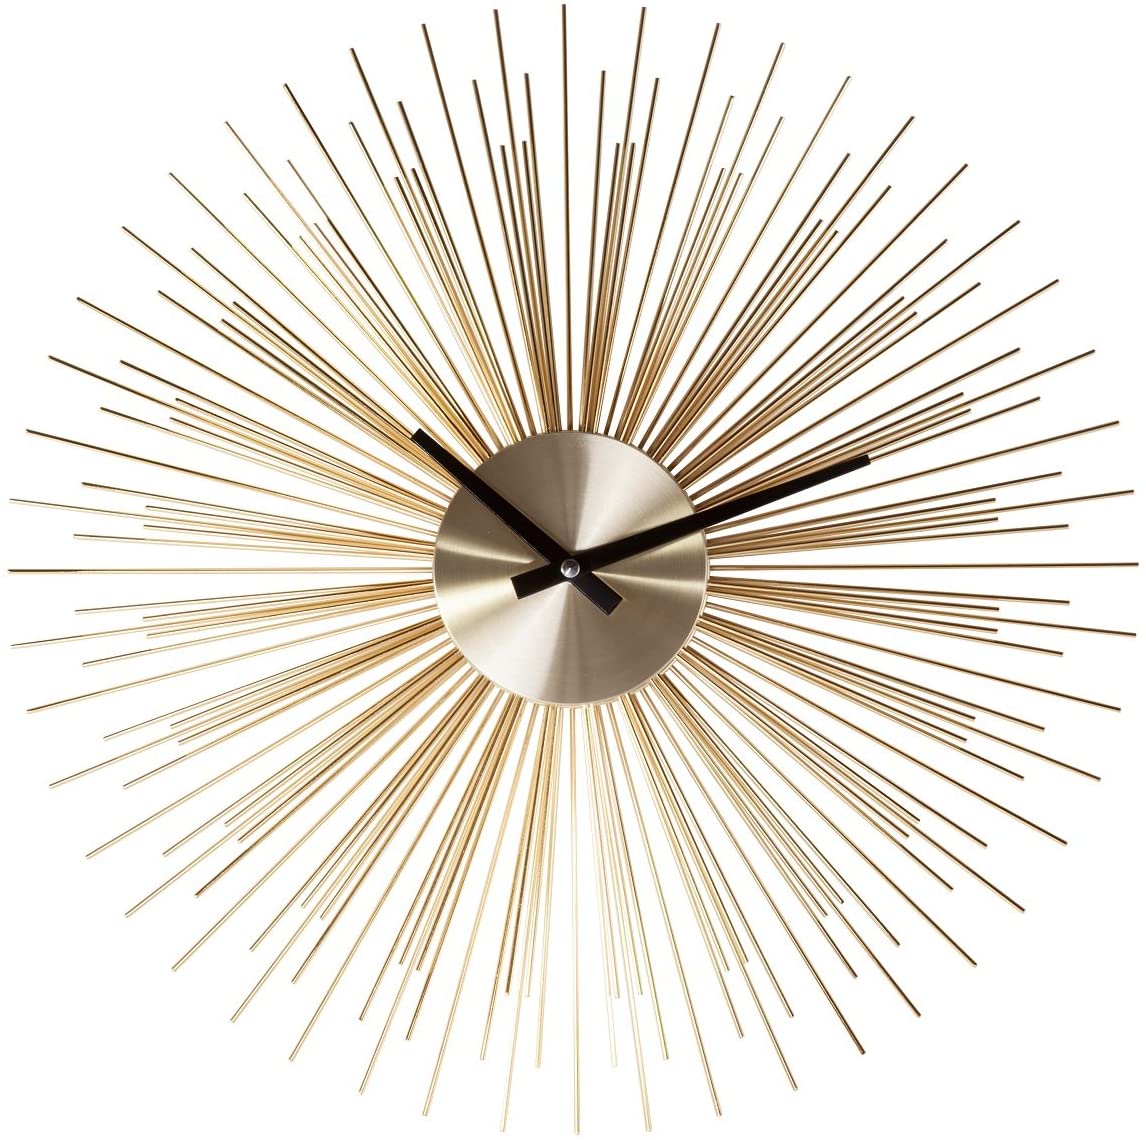 Stilnovo G133719GOLD Urchin Clock-Gold, Pack of 1